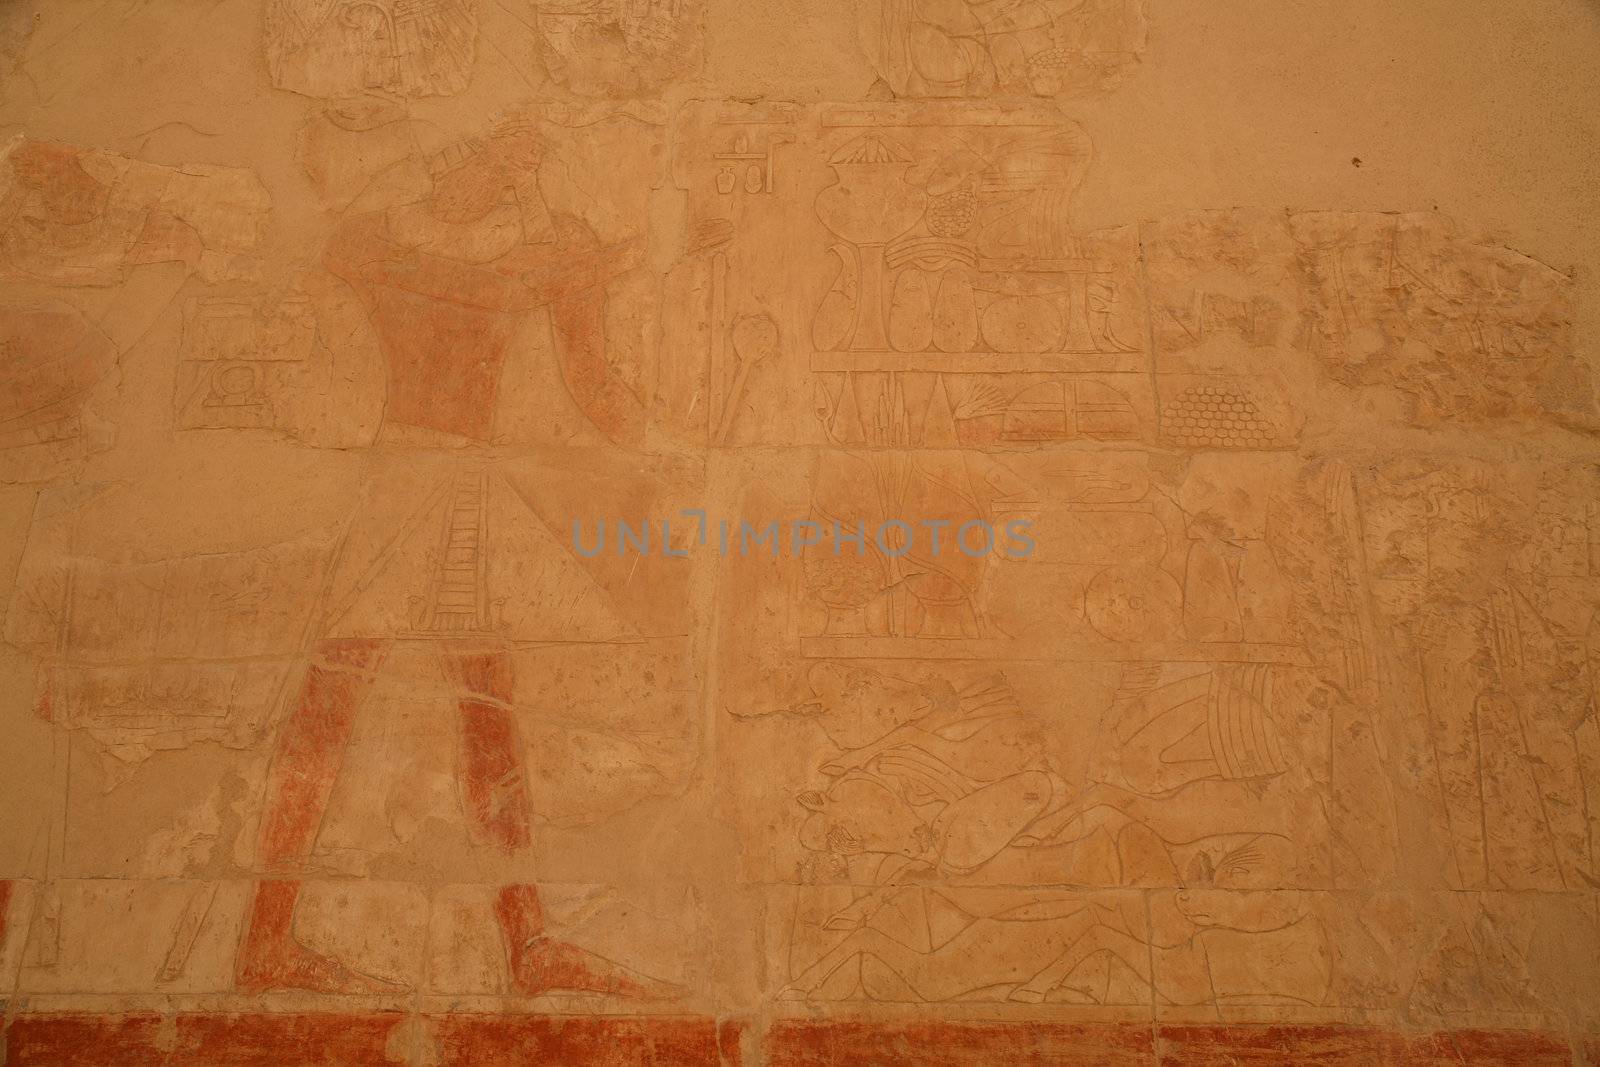 Egypt Series (Hieroglyph - horizontal) by Daniel_Wiedemann